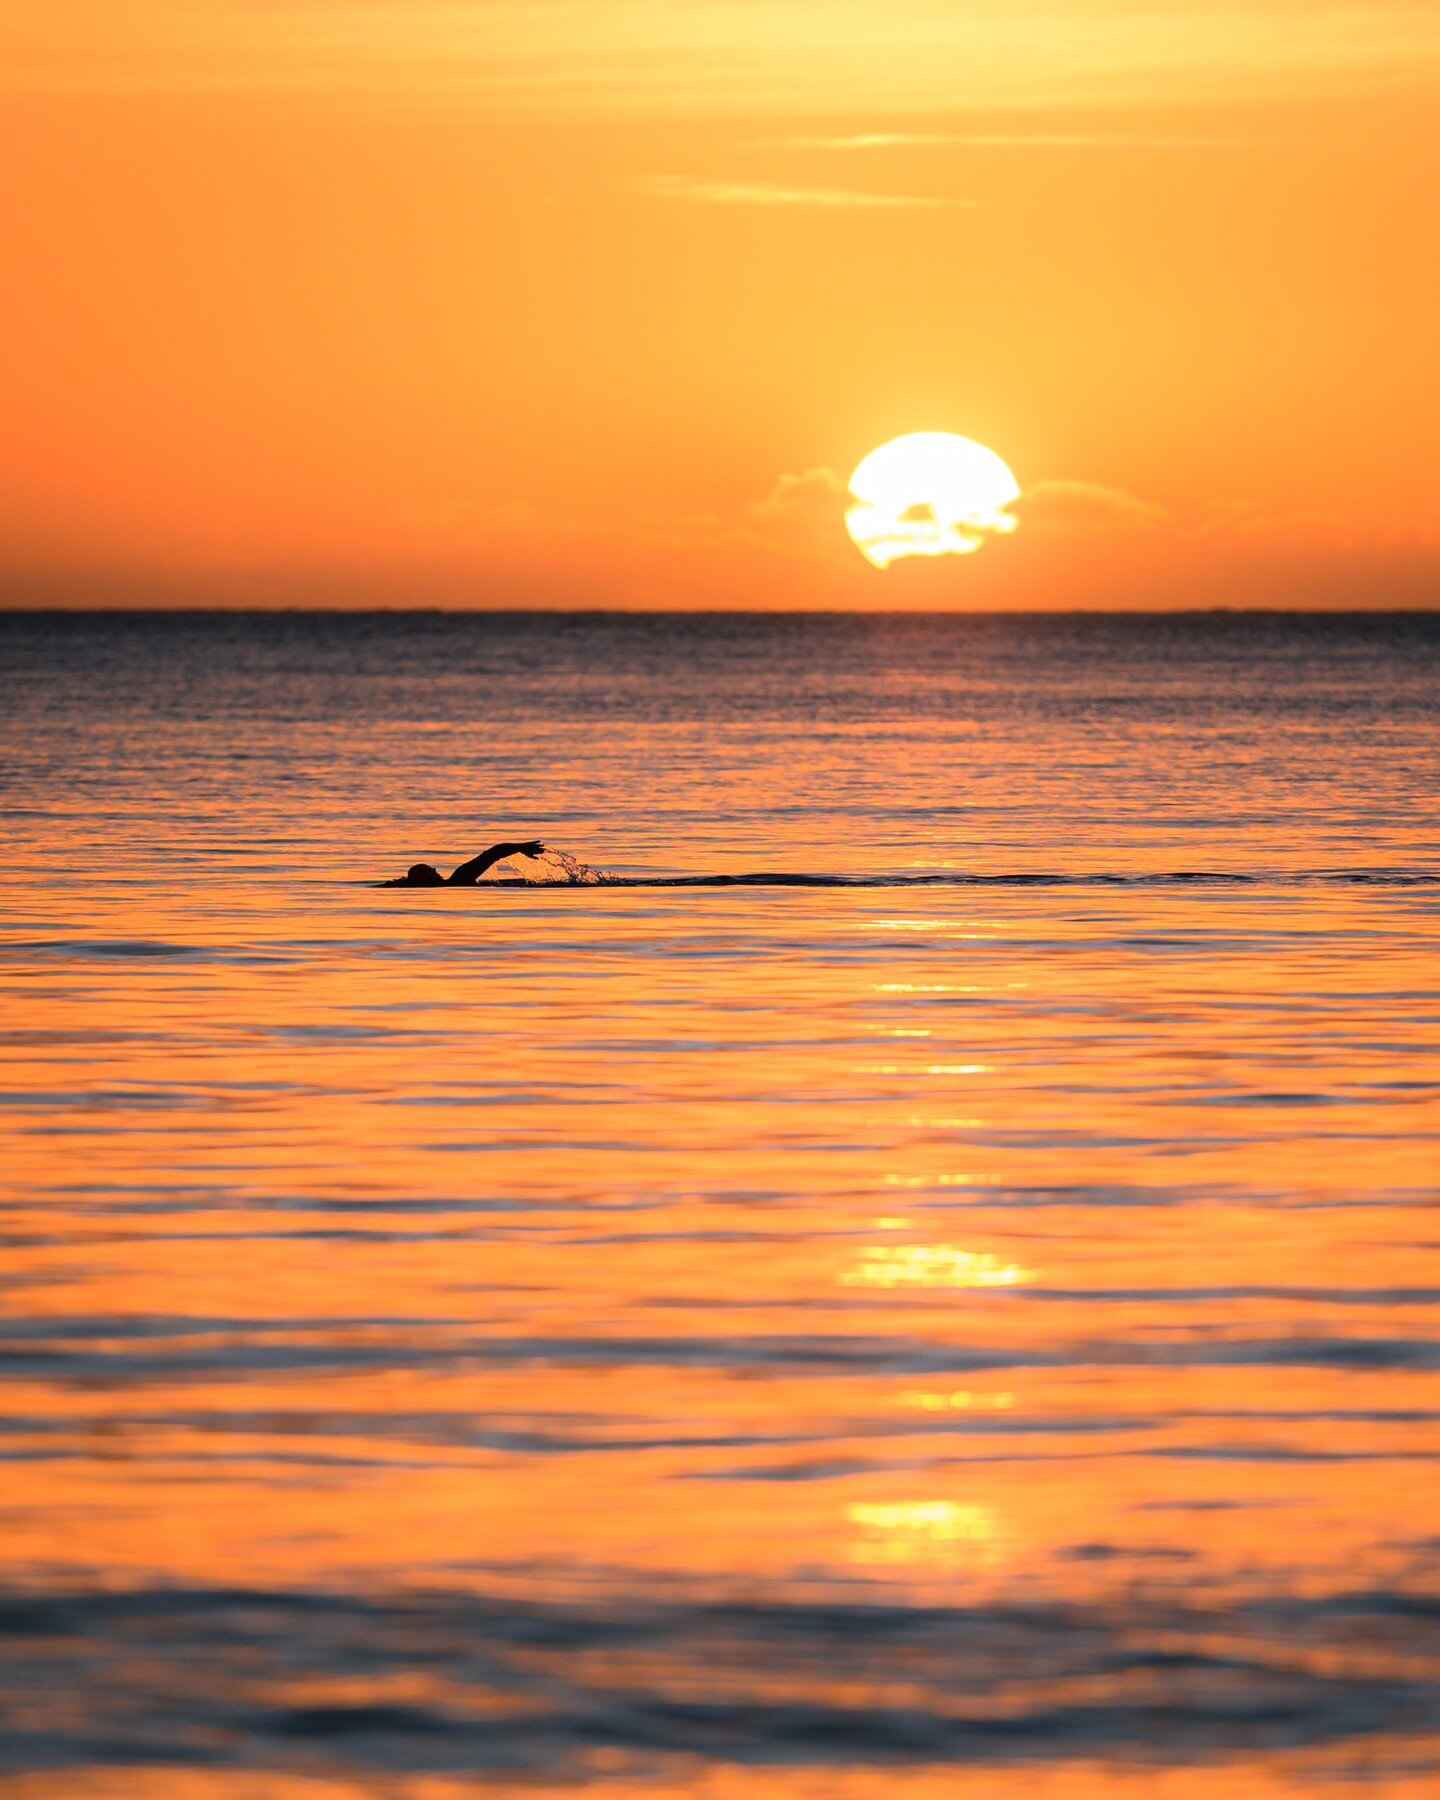 Chasing sunrise hues with every stroke 🌅🌊 #MorningMeditation #SeaSwim #SunriseMagic